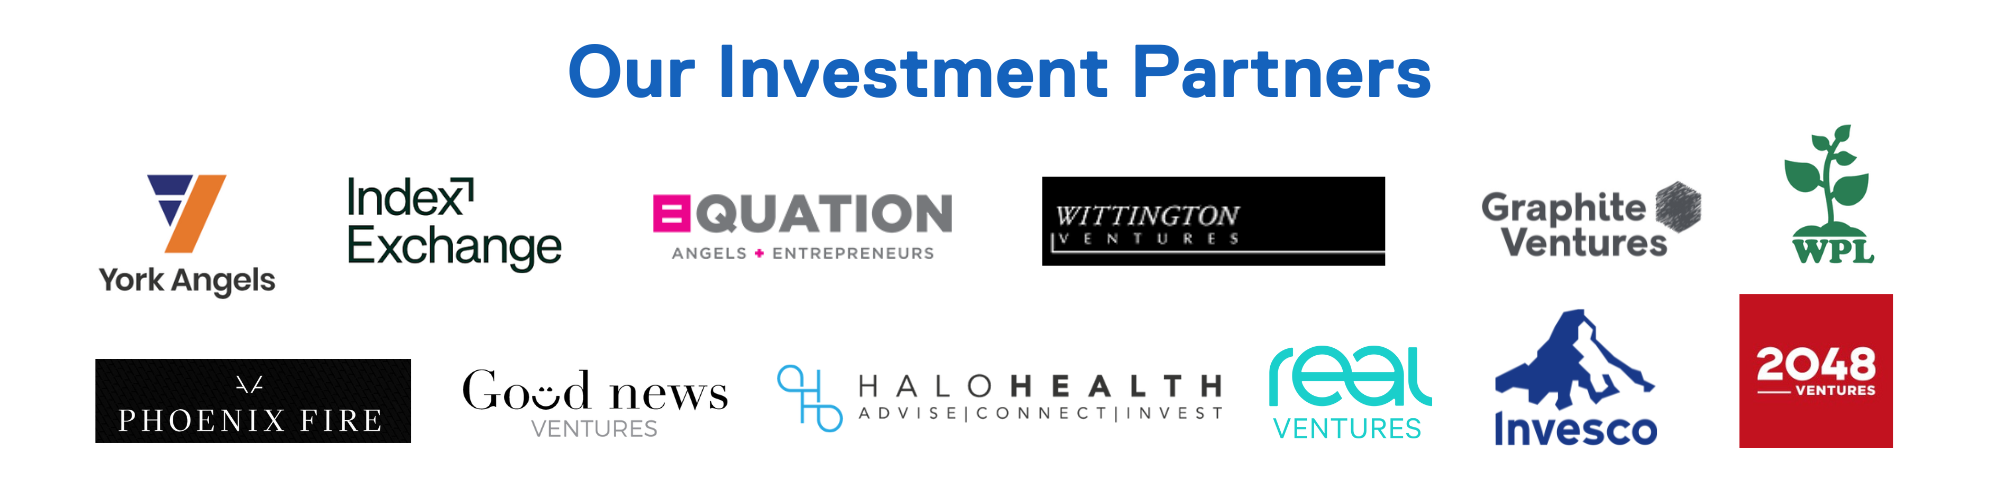 Brampton venture zone investment partners